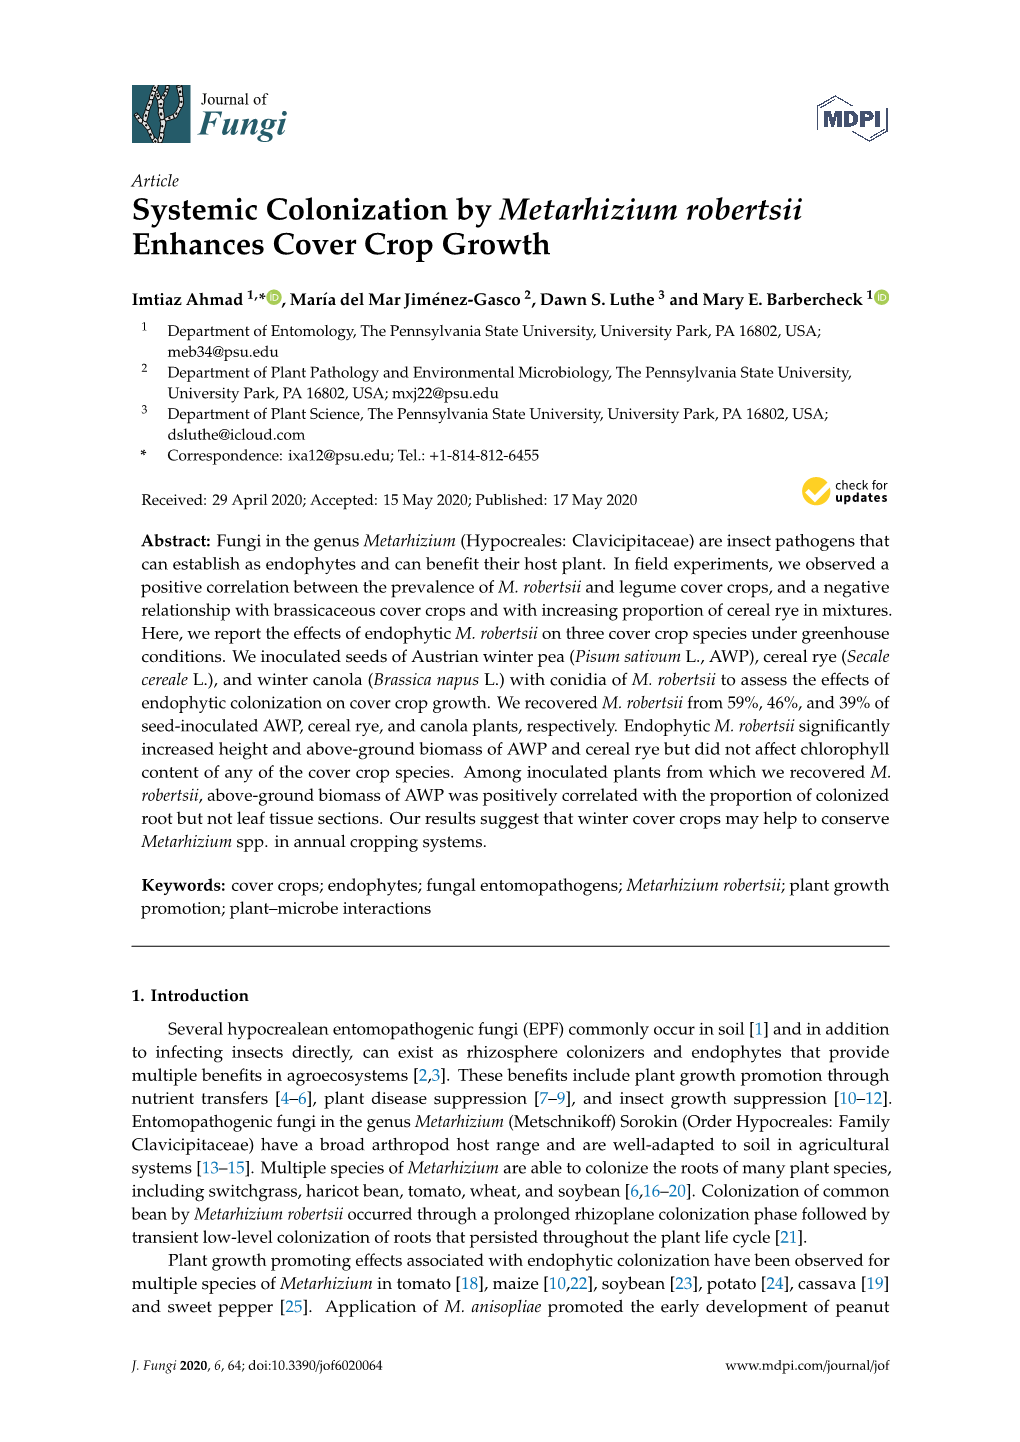 Systemic Colonization by Metarhizium Robertsii Enhances Cover Crop Growth